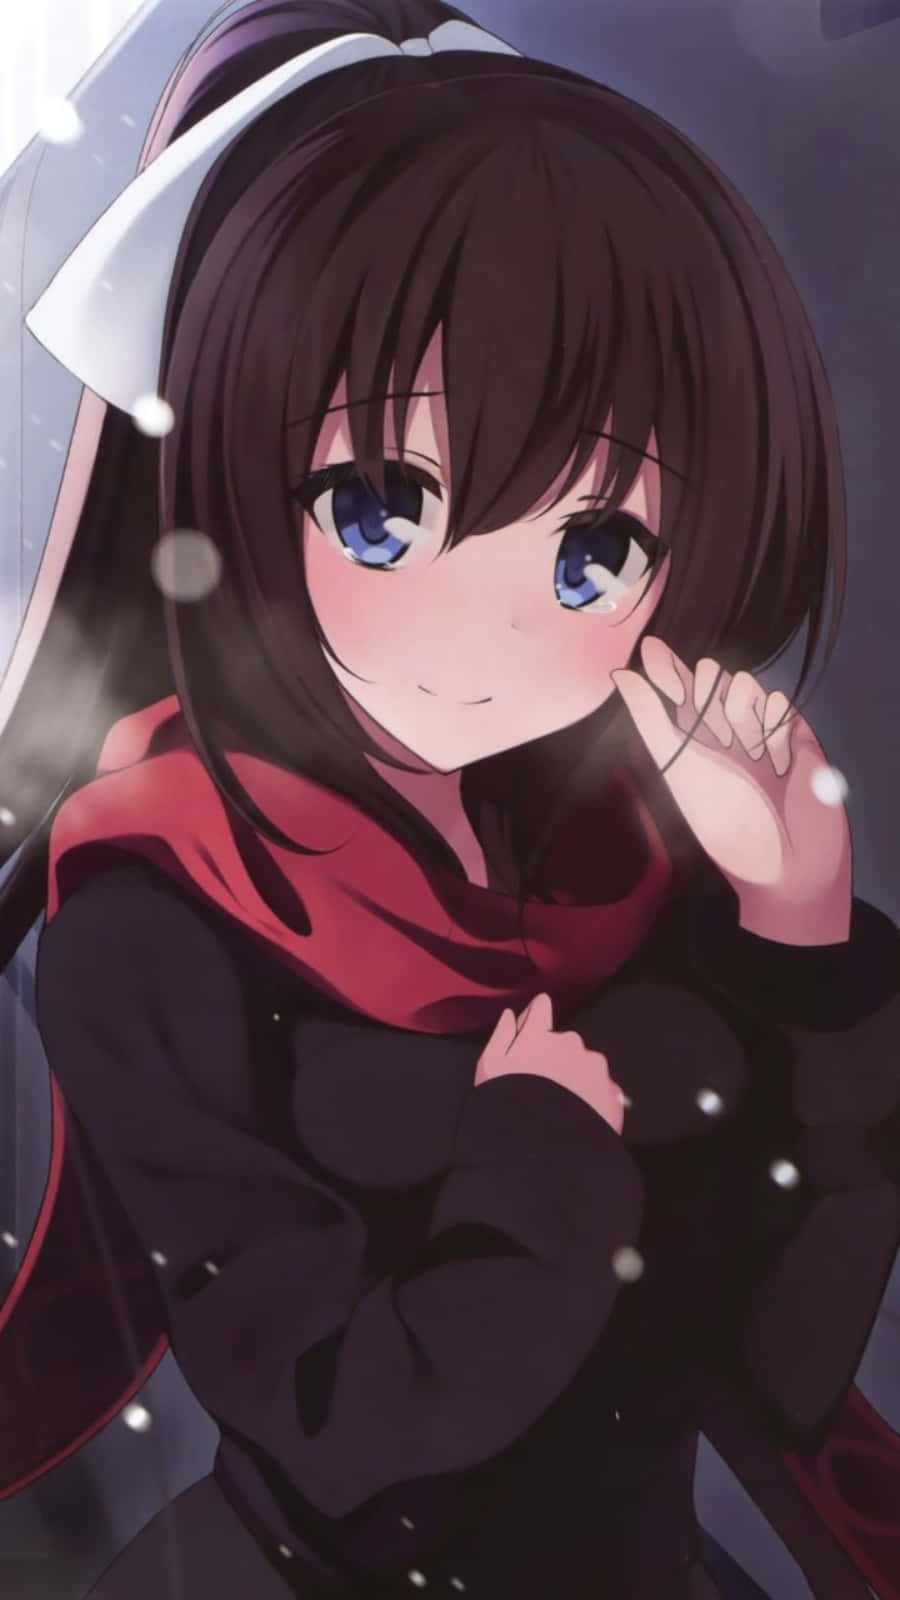 Girly Cute Blue-Eyed Anime Wallpaper